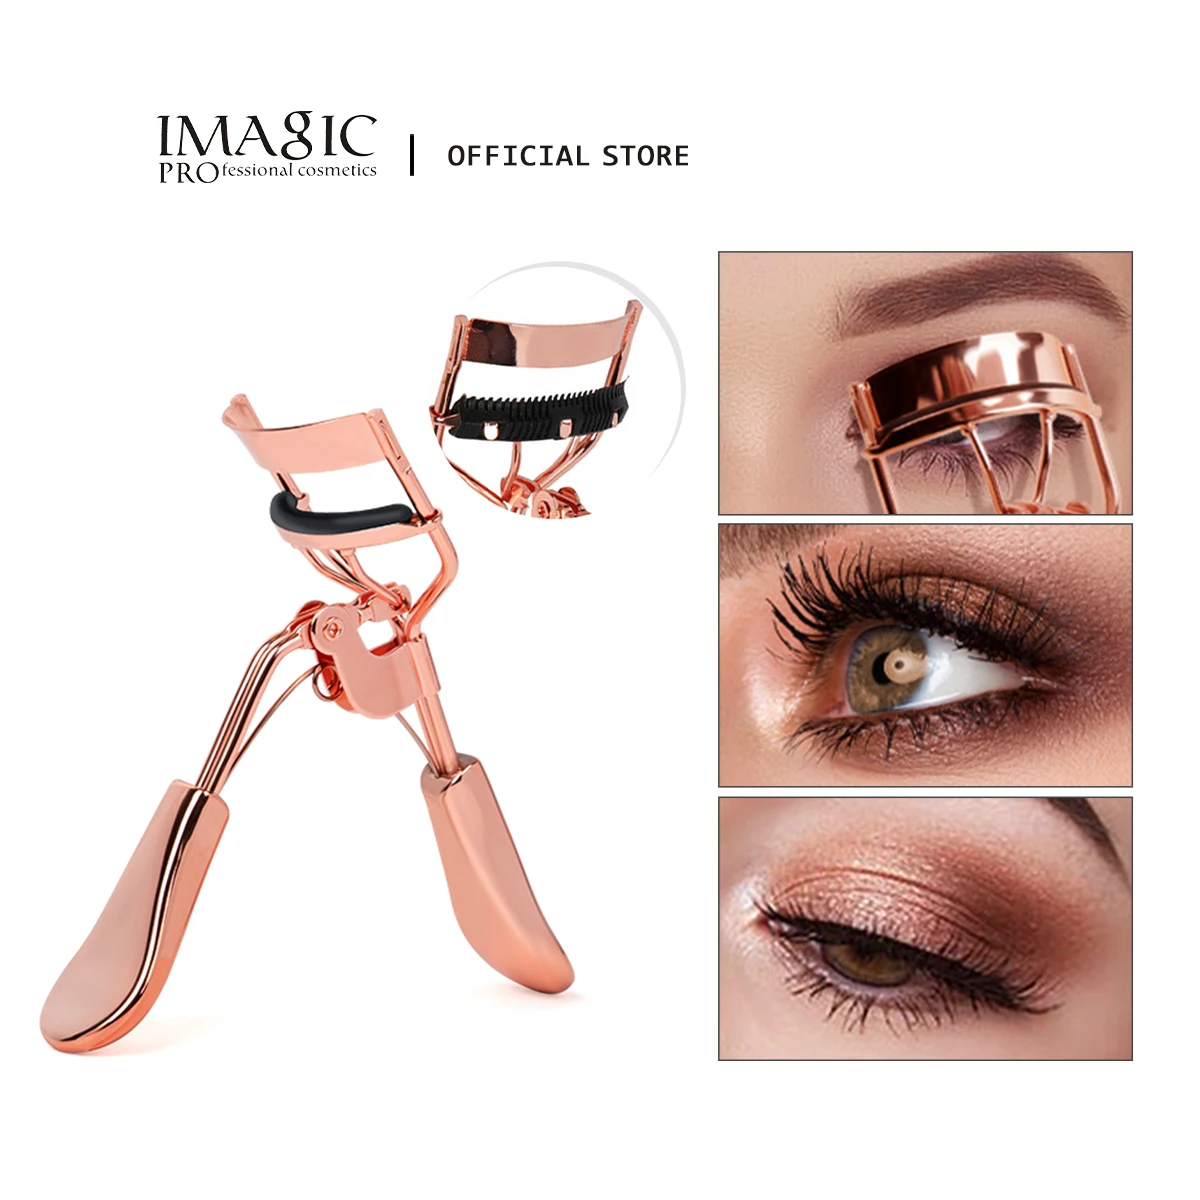 IMAGIC Eyelash Curler Portable Makeup Tools wimper kruller Natural Curling For Asian Eyes Fit All Eye Shapes Women Beauty Makeup